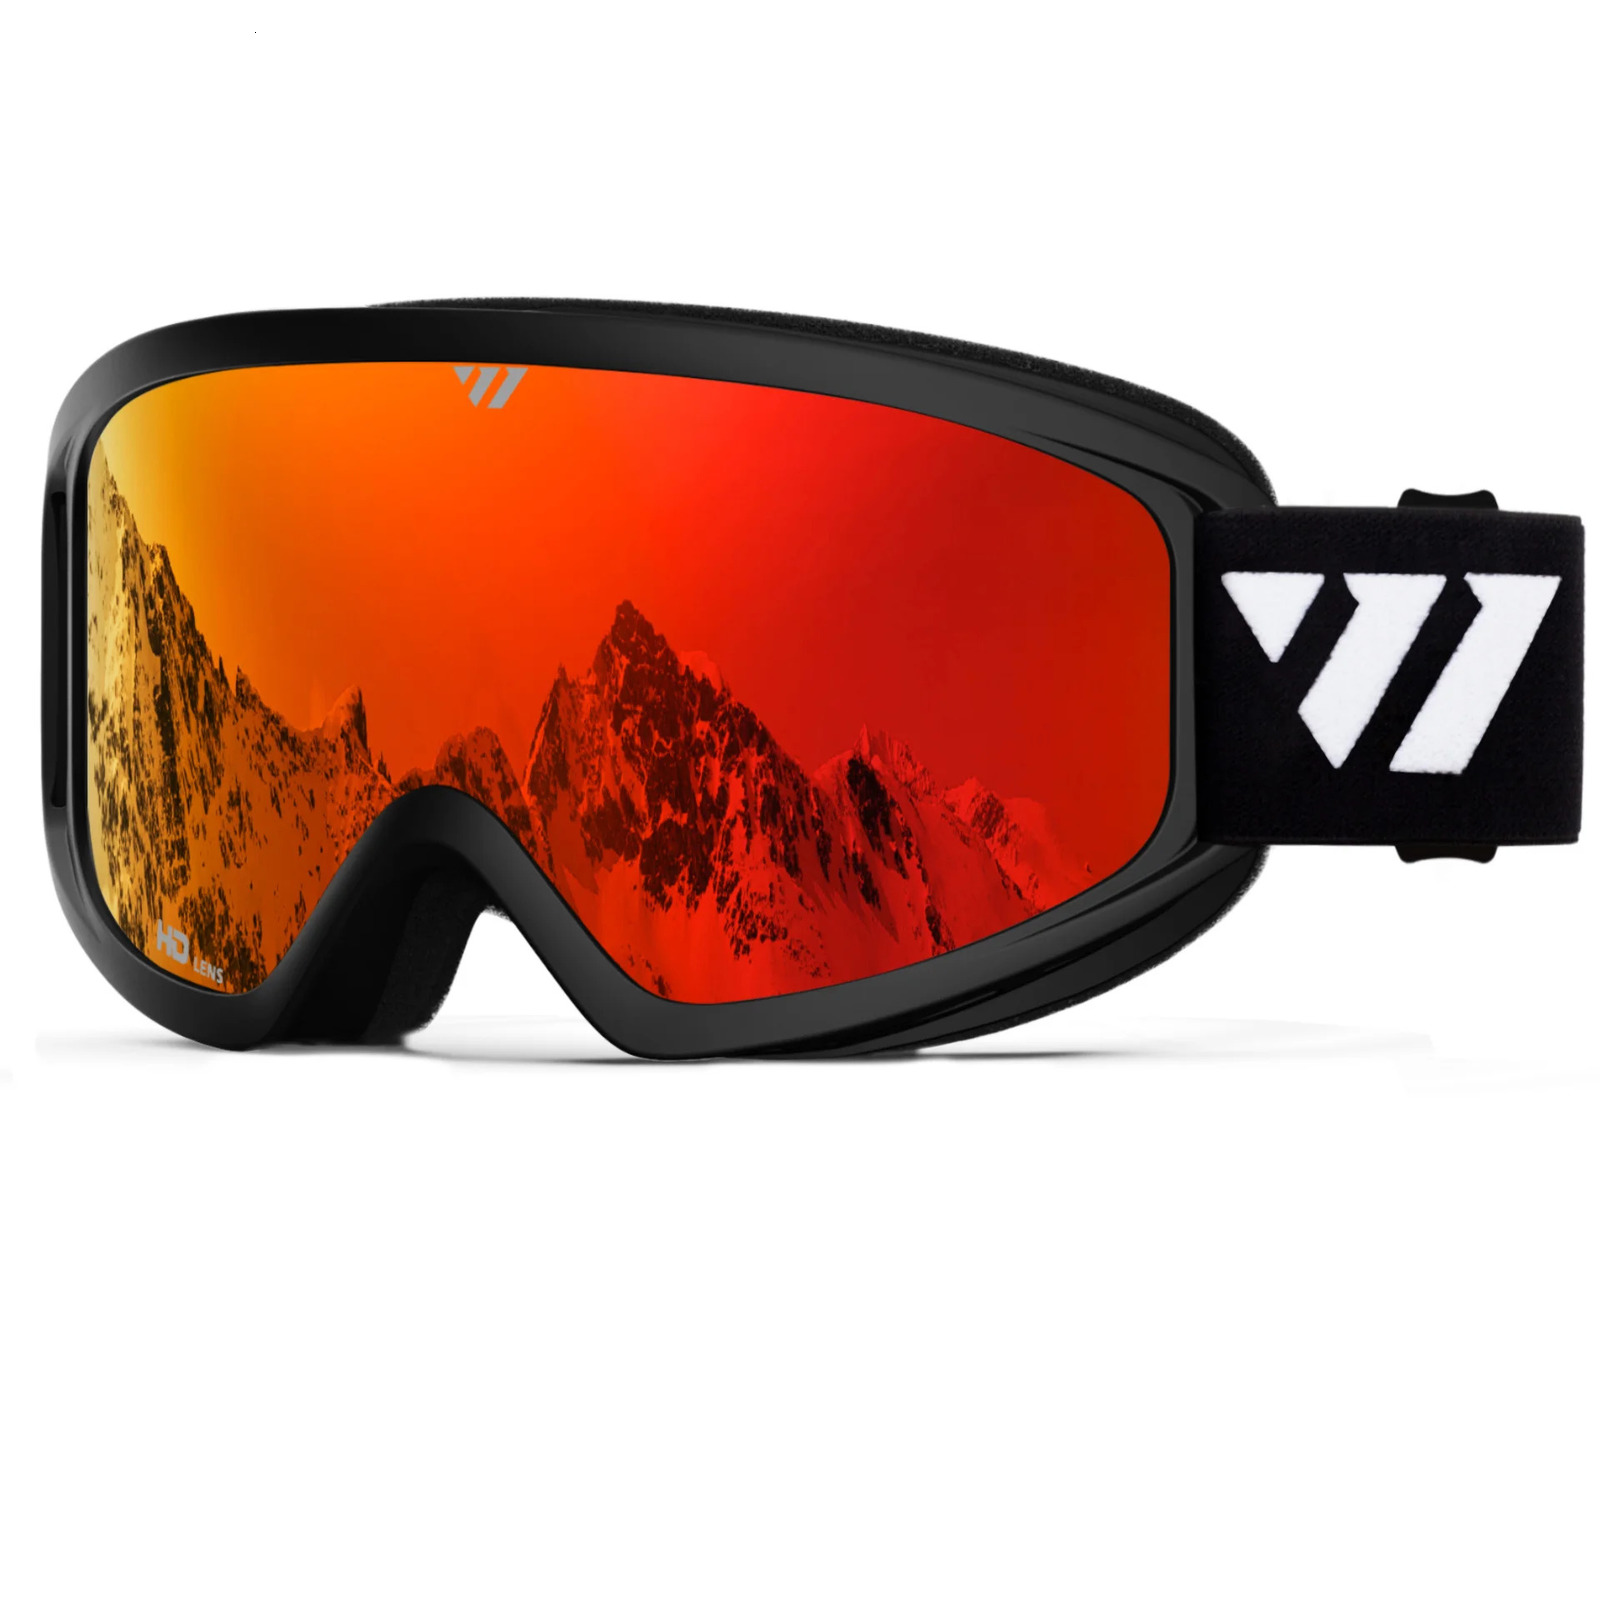 Juli Brand Professional Ski Goggles Double Leners Lens anti-Fog UV400 Ski Glasses Gogglesw Goggles Men Women W1 231221